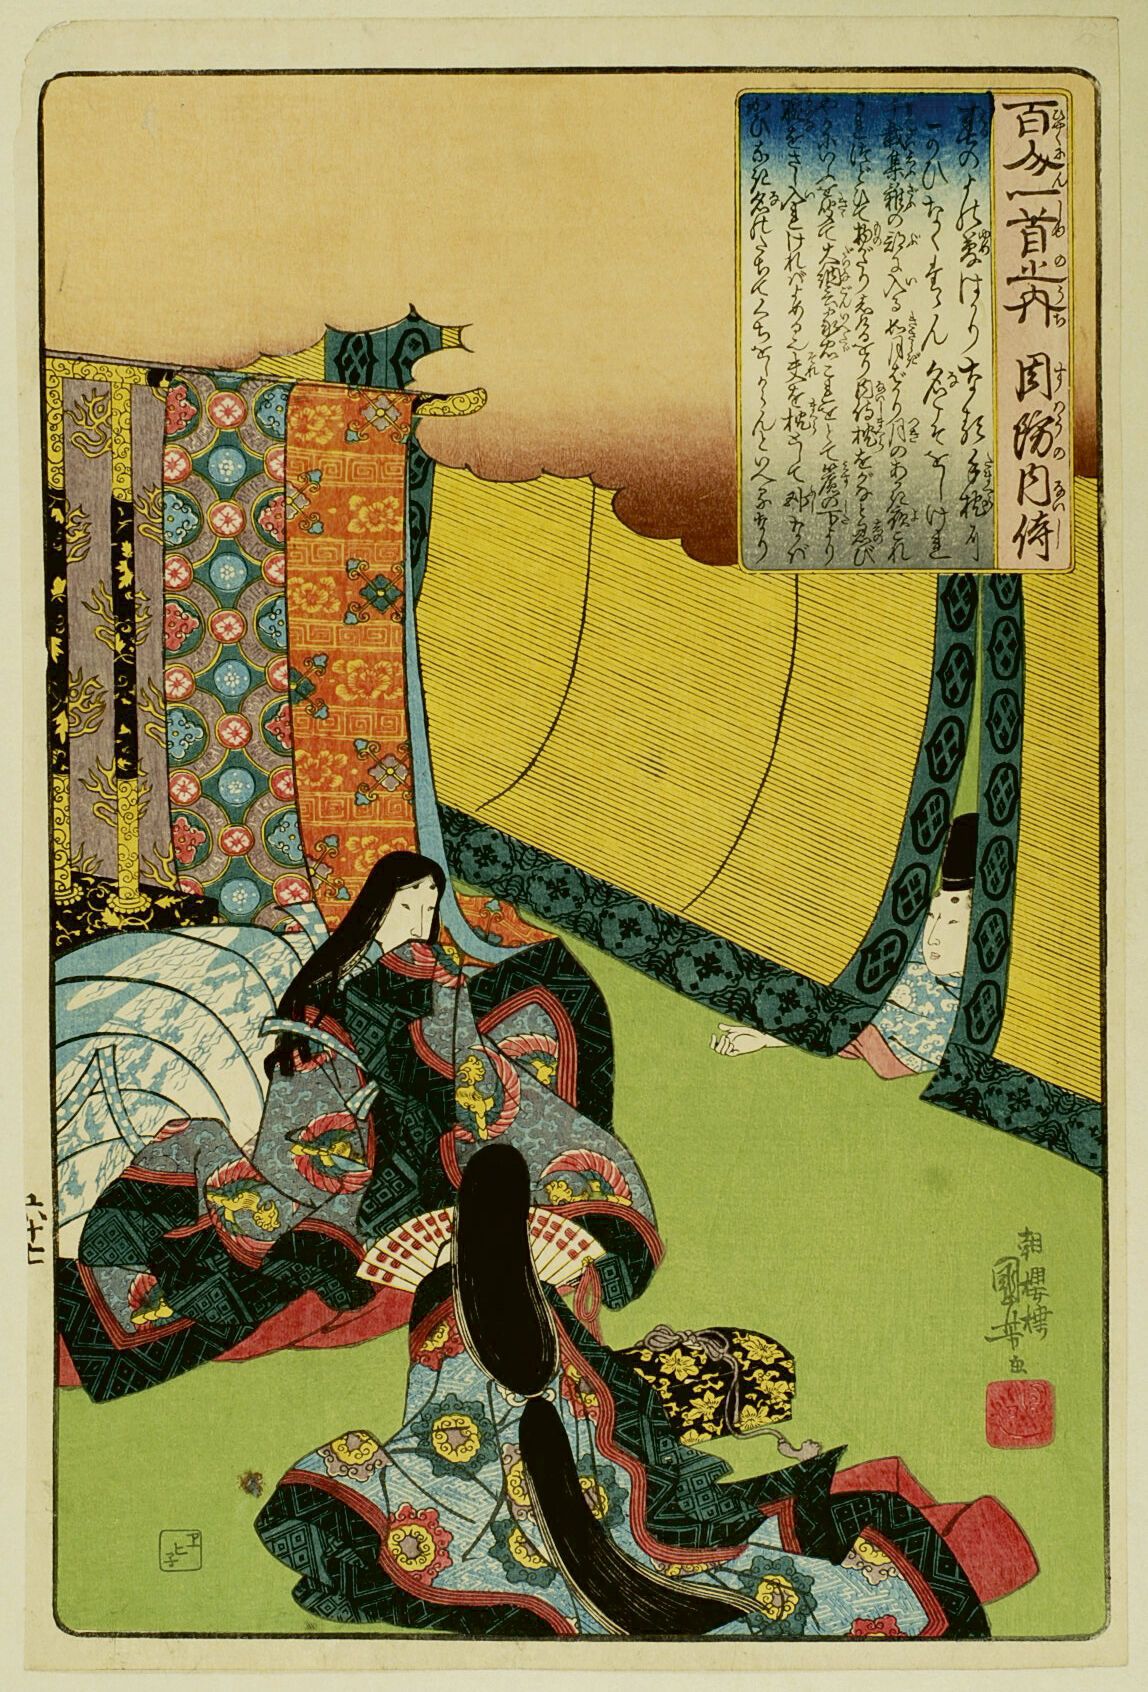 Null 宇都宫邦彦 (1797-1861)
百人一首》系列中的 "大板"（Oban tate-e），板块是Suô-no-naishi，绅士从竹帘下溜走，接近女&hellip;